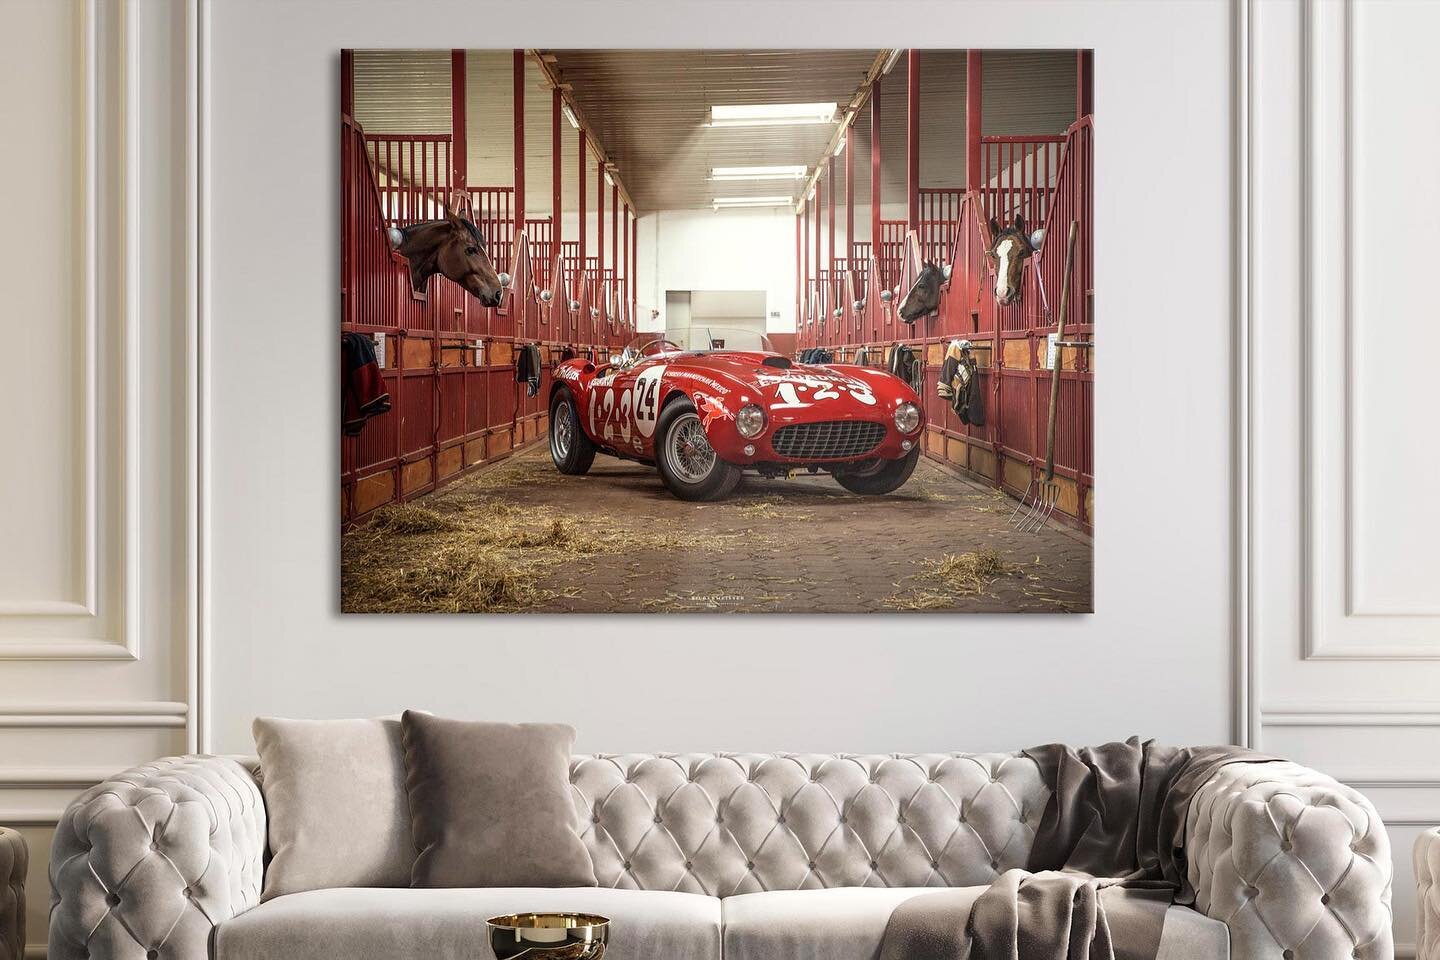 BILDERMEISTER-WANDBILD, Motiv: &quot;Ferrari 375 MM Spider Pininfarina, Horses 2015&ldquo;, erh&auml;ltlich in zahlreichen Ausf&uuml;hrungen und Formaten, z. B. als Fotoleinwand im Format 160 x 120cm f&uuml;r EUR 379,- (ab EUR 49,-).

#ferrari #pferd